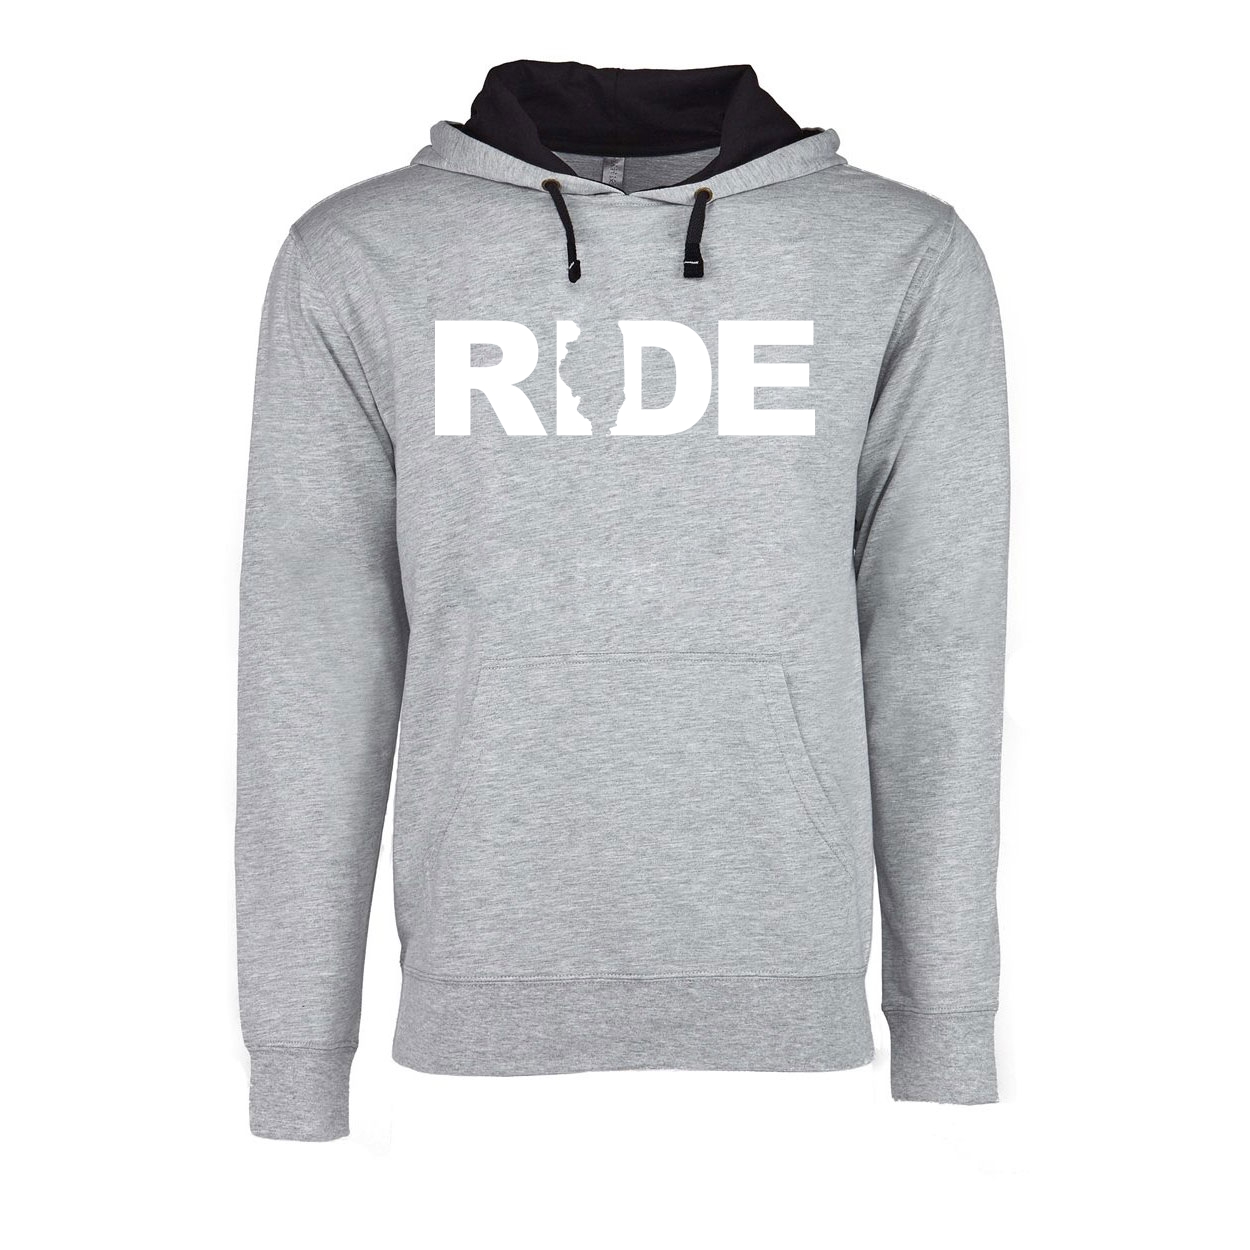 Ride Illinois Classic Lightweight Sweatshirt Heather Gray/Black (White Logo)